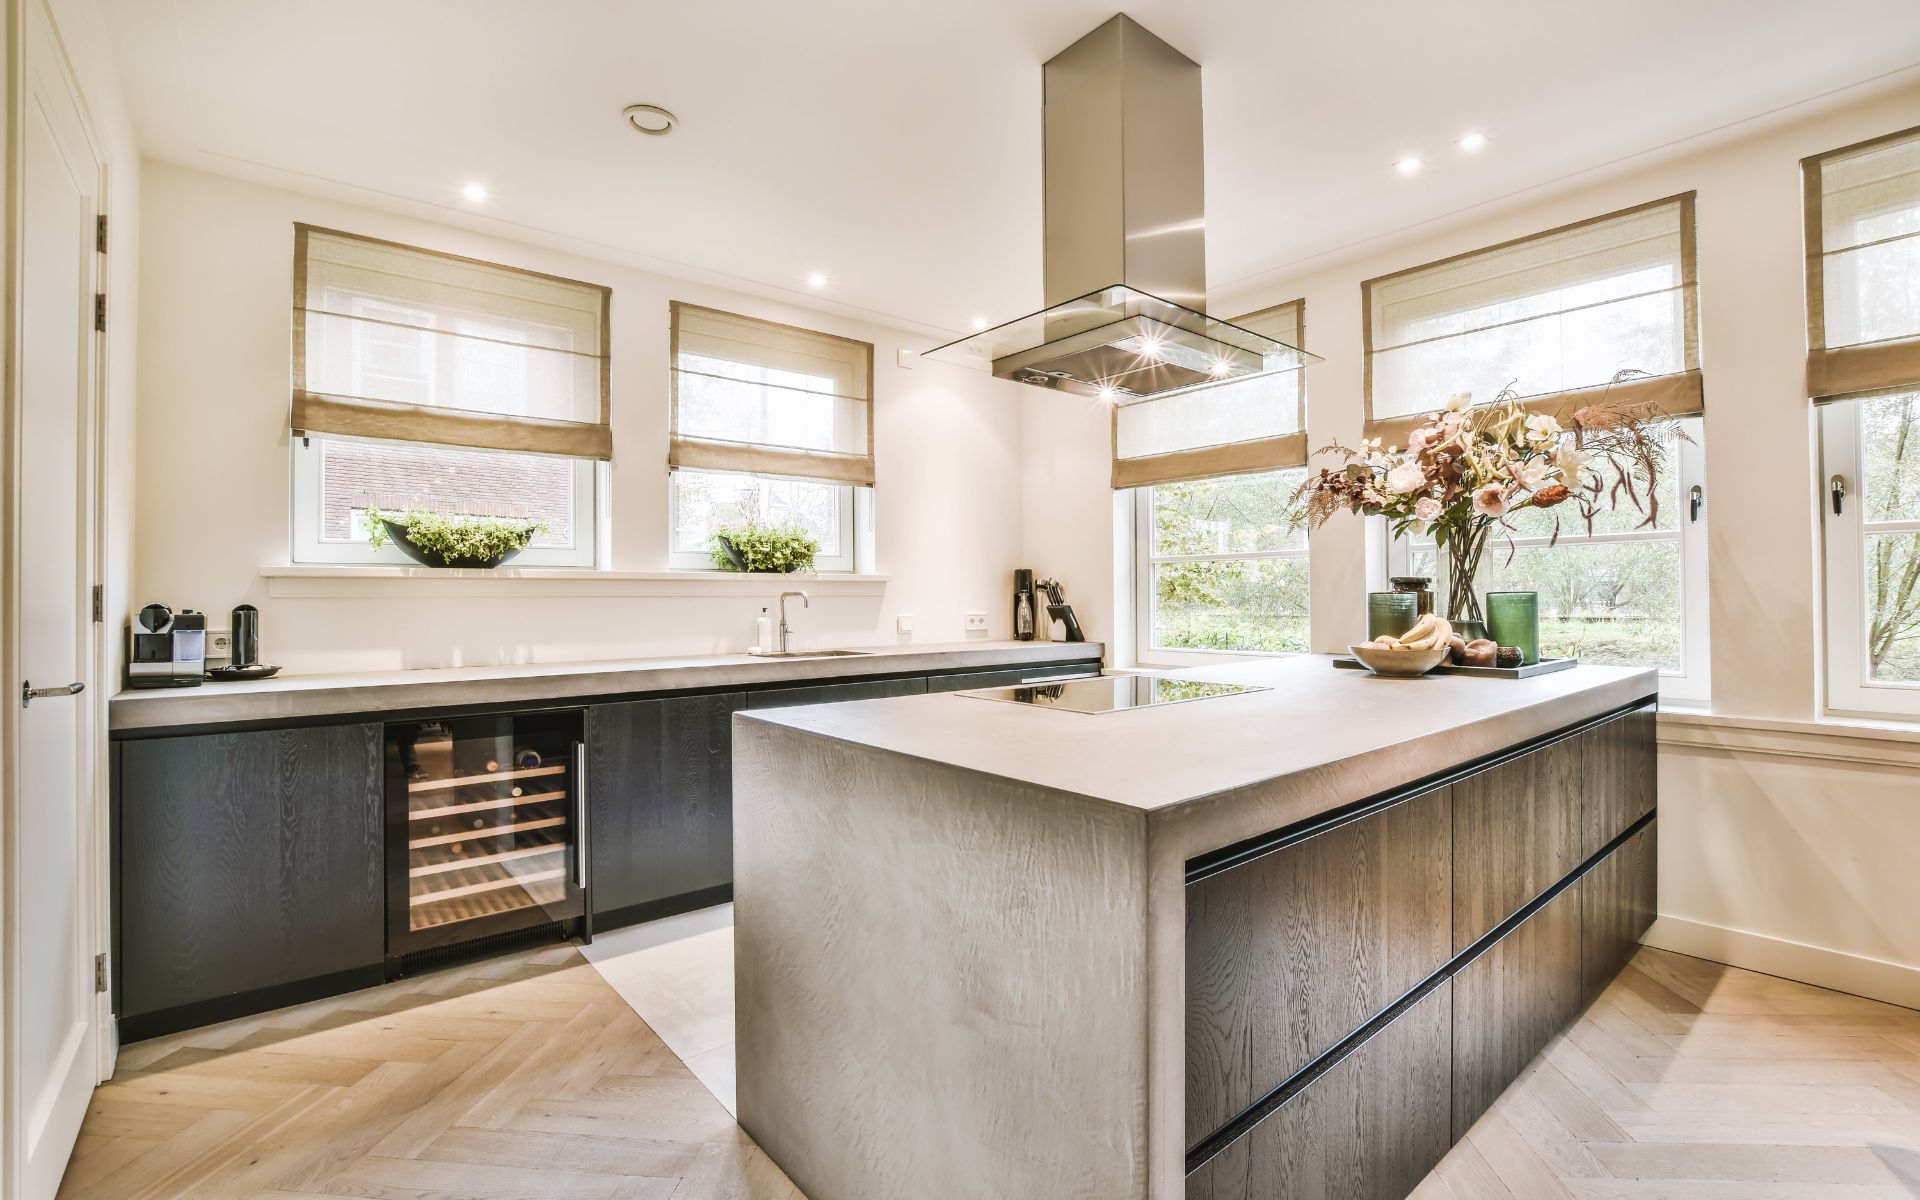 Elegant cream kitchen with gray cabinets